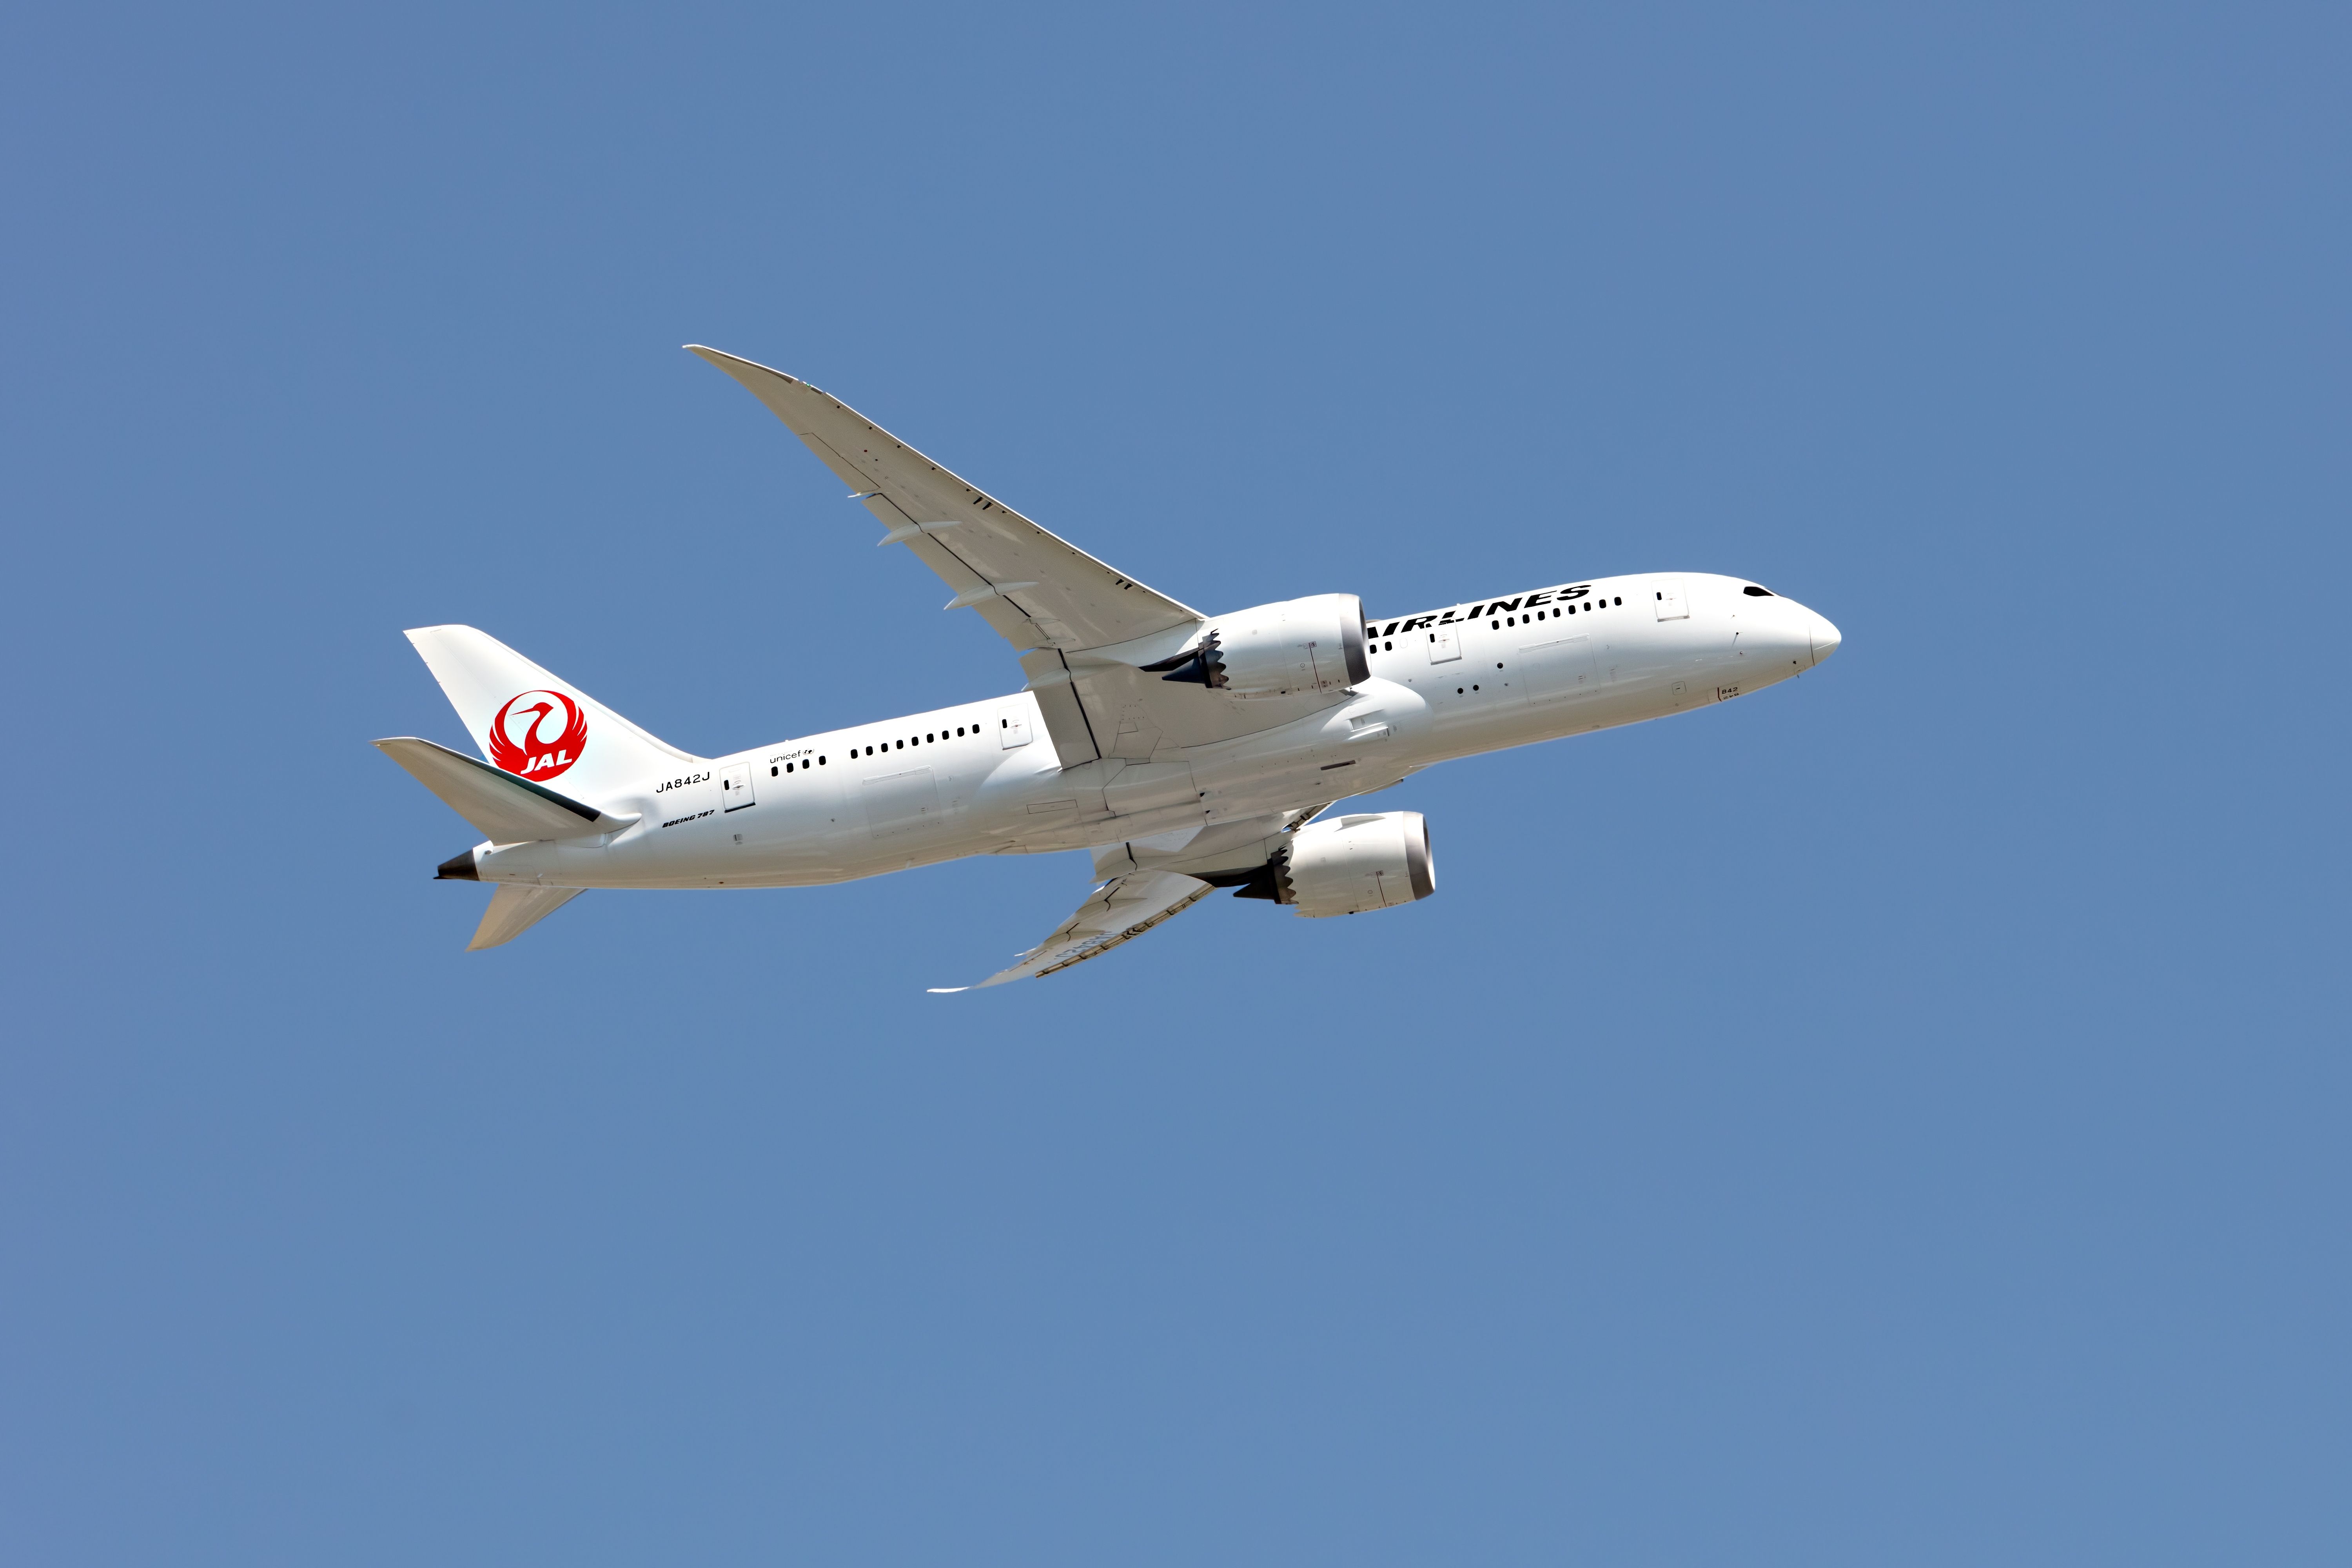 Japan Airlines Boeing 787-8 departing LHR shutterstock_2321154407